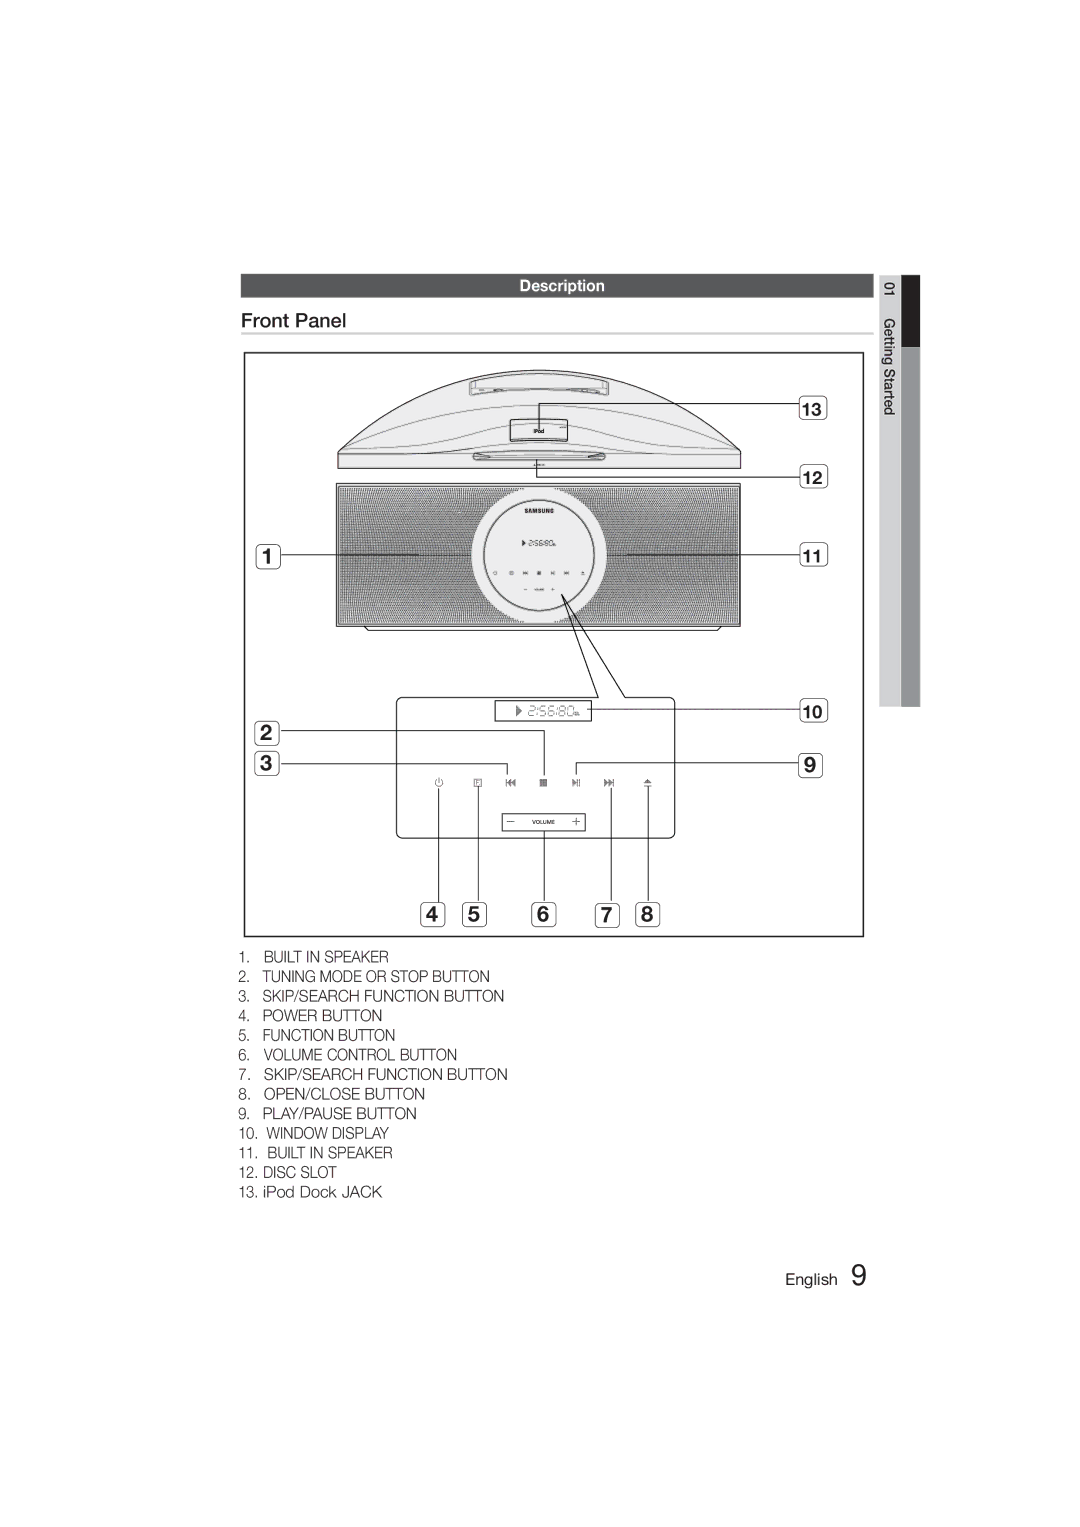 Samsung MM-D470D/EN, MM-D470D/XN, MM-D470D/ZF, MM-D470D/XE manual Front Panel, Description, IPod Dock Jack English 